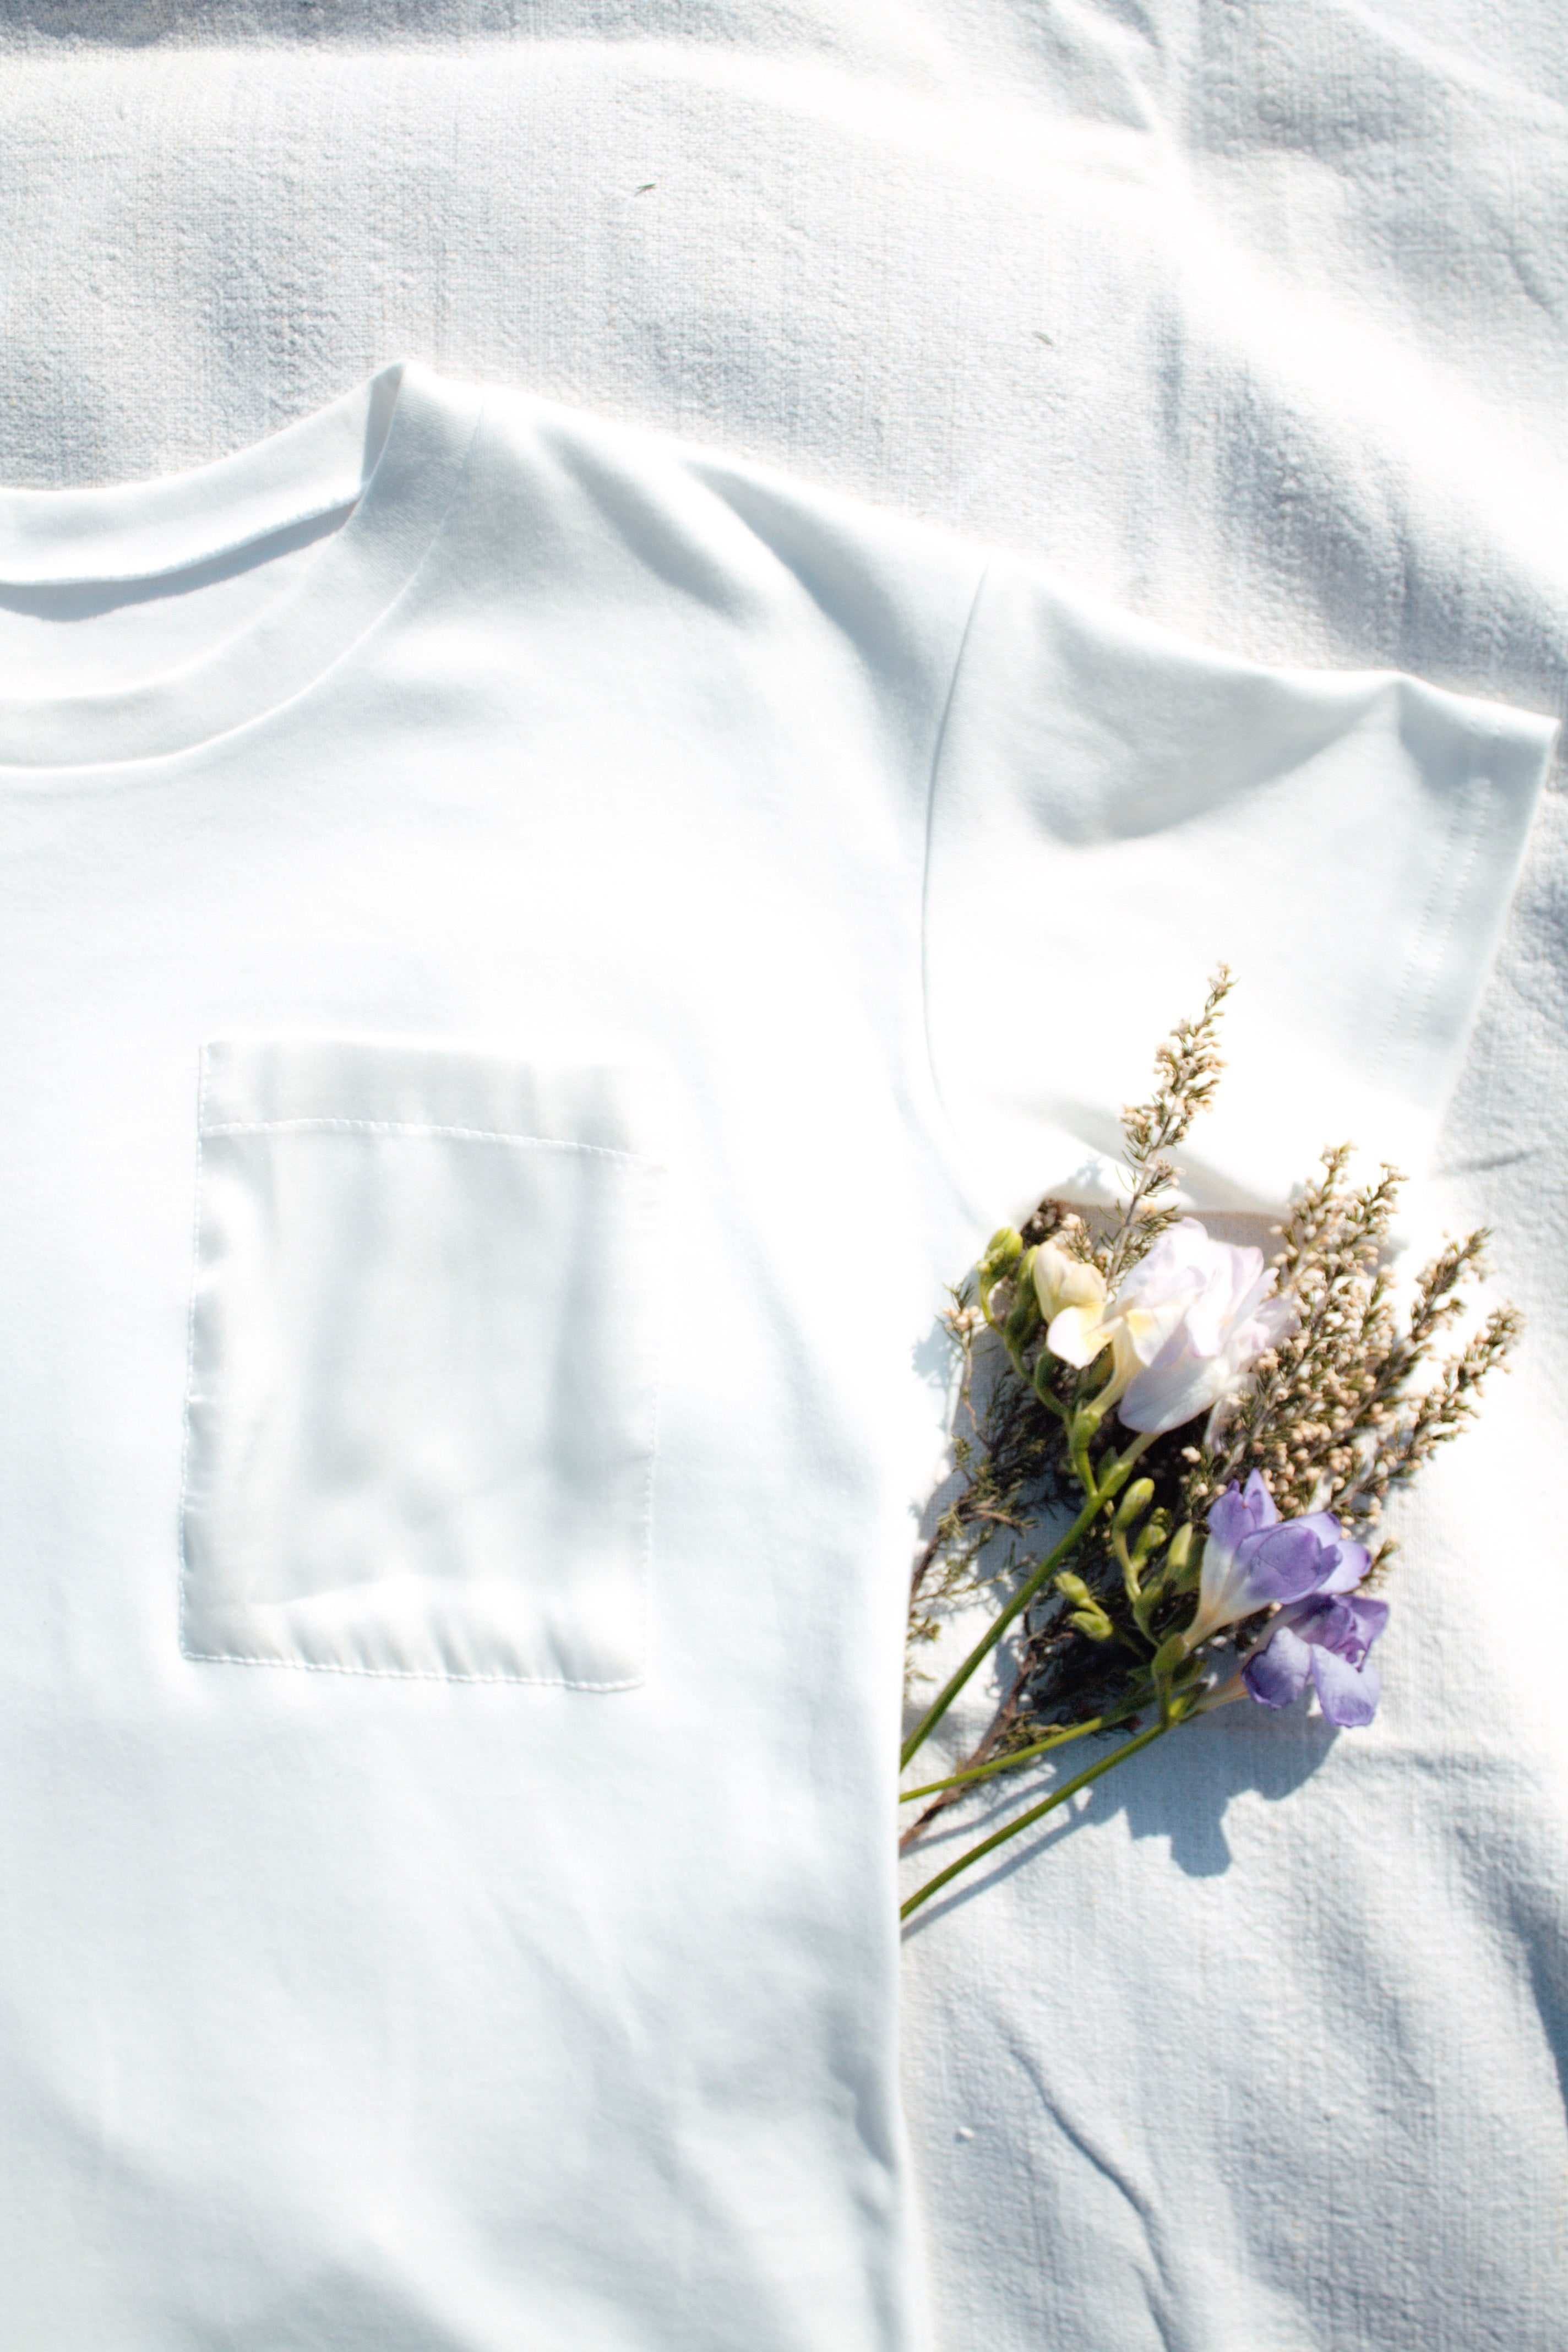 100% organic cotton t-shirt (off-white)